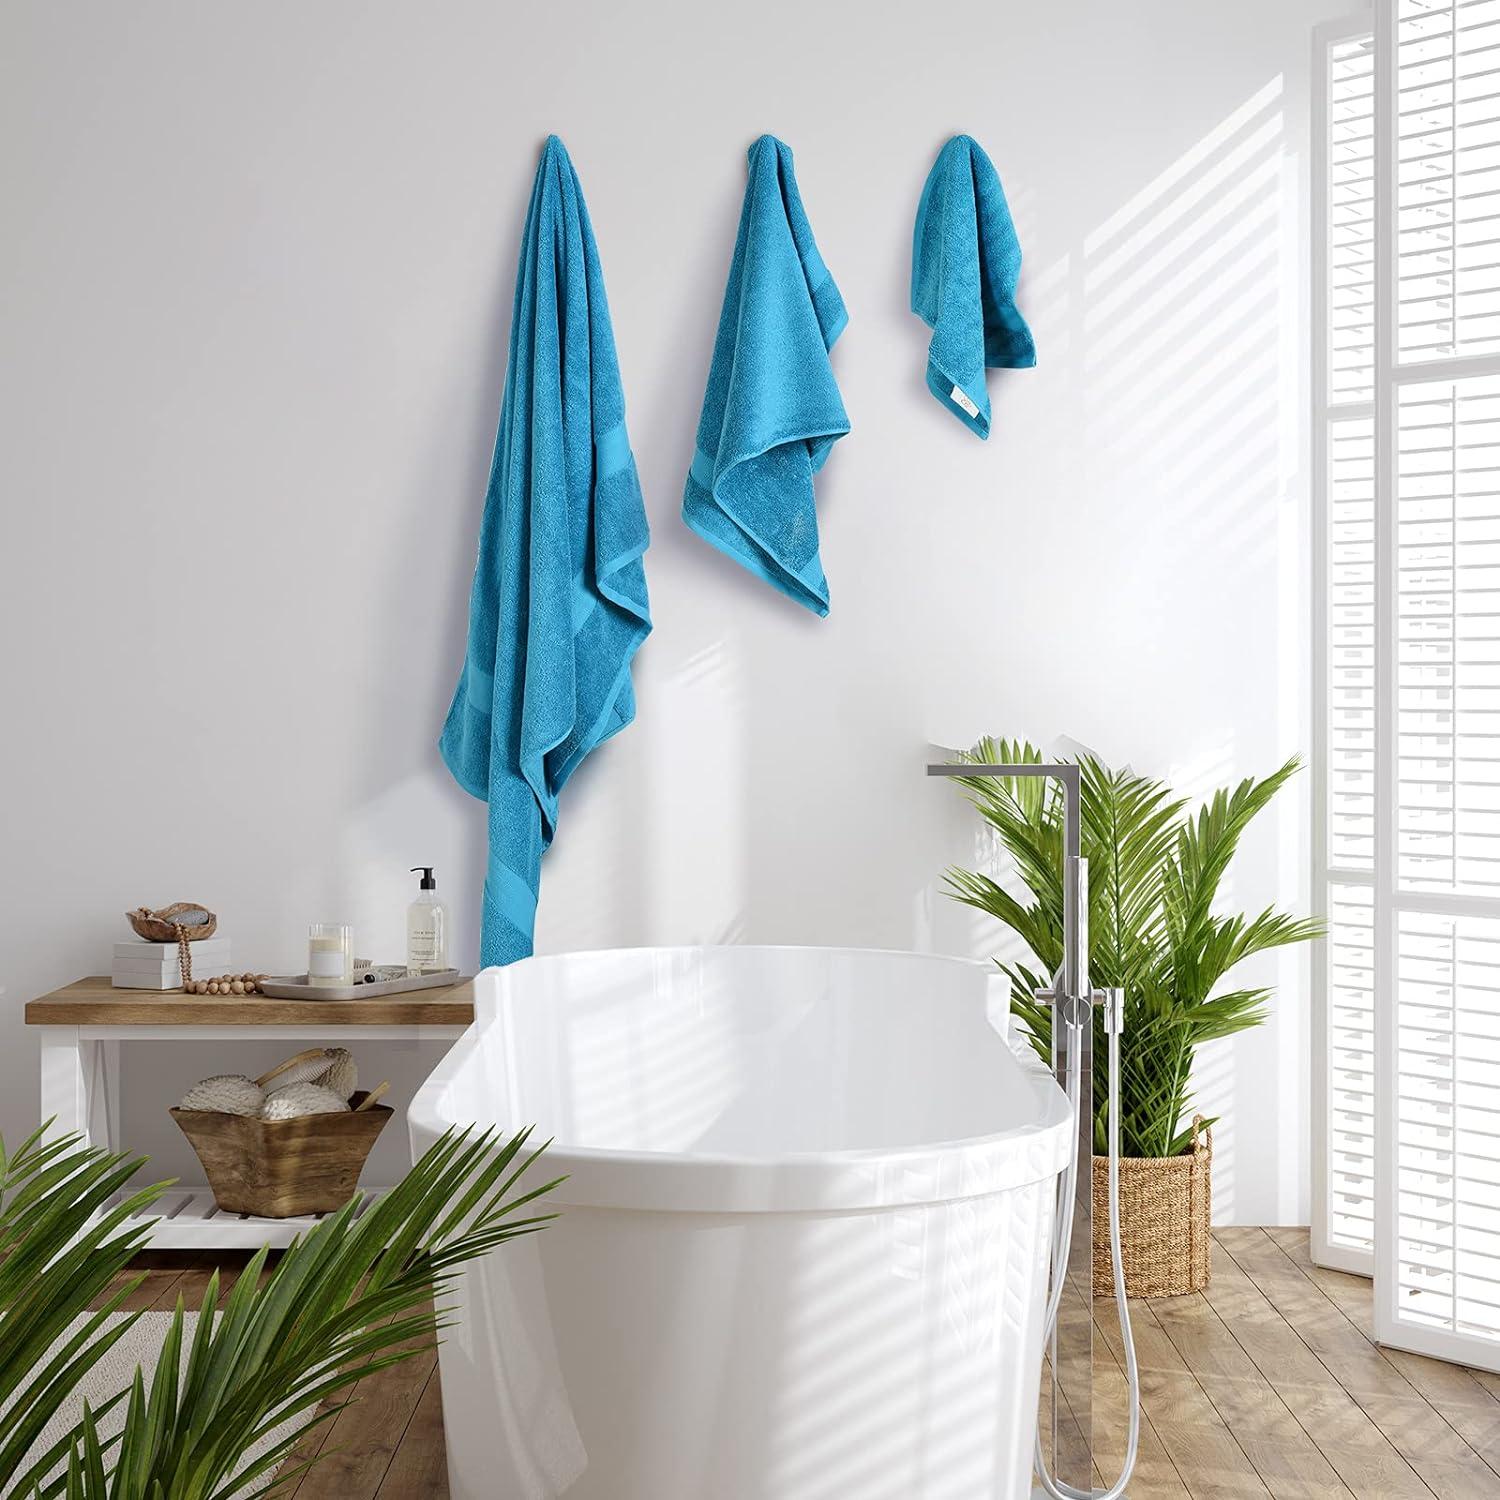 100% Cotton 650 GSM 6-Piece Bath Towel Sets - Highly Absorbent